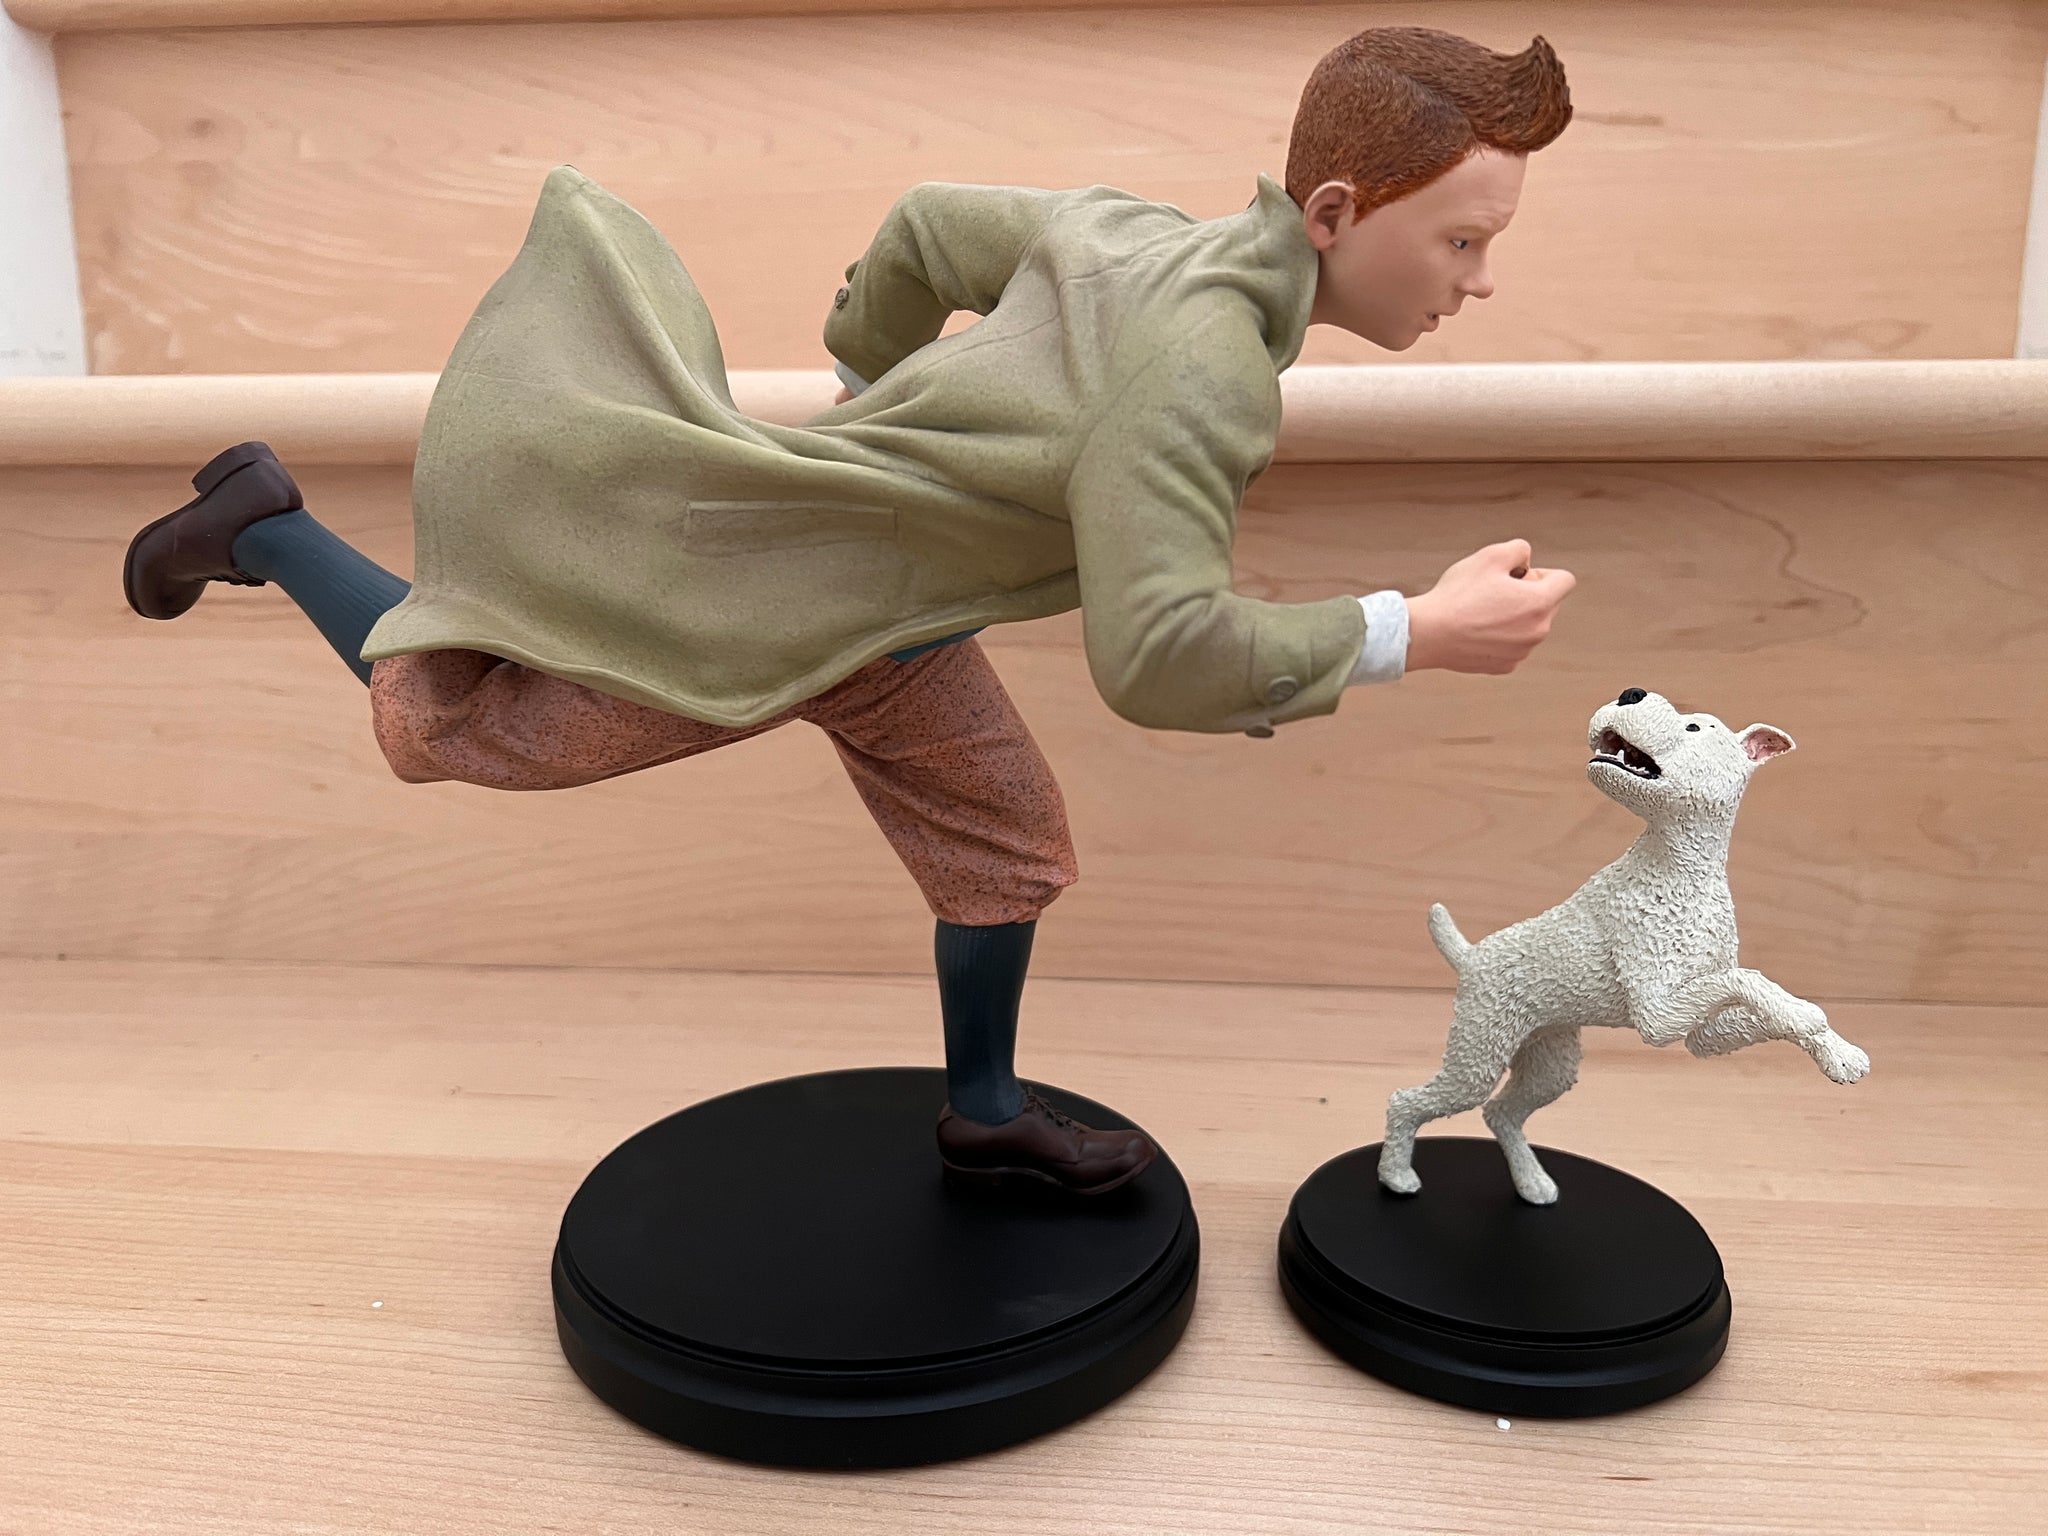 Statuette Moulinsart 47000 Tintin Hiker & Snowy: Destination Moon 2020 25cm  Resin Model Figure 